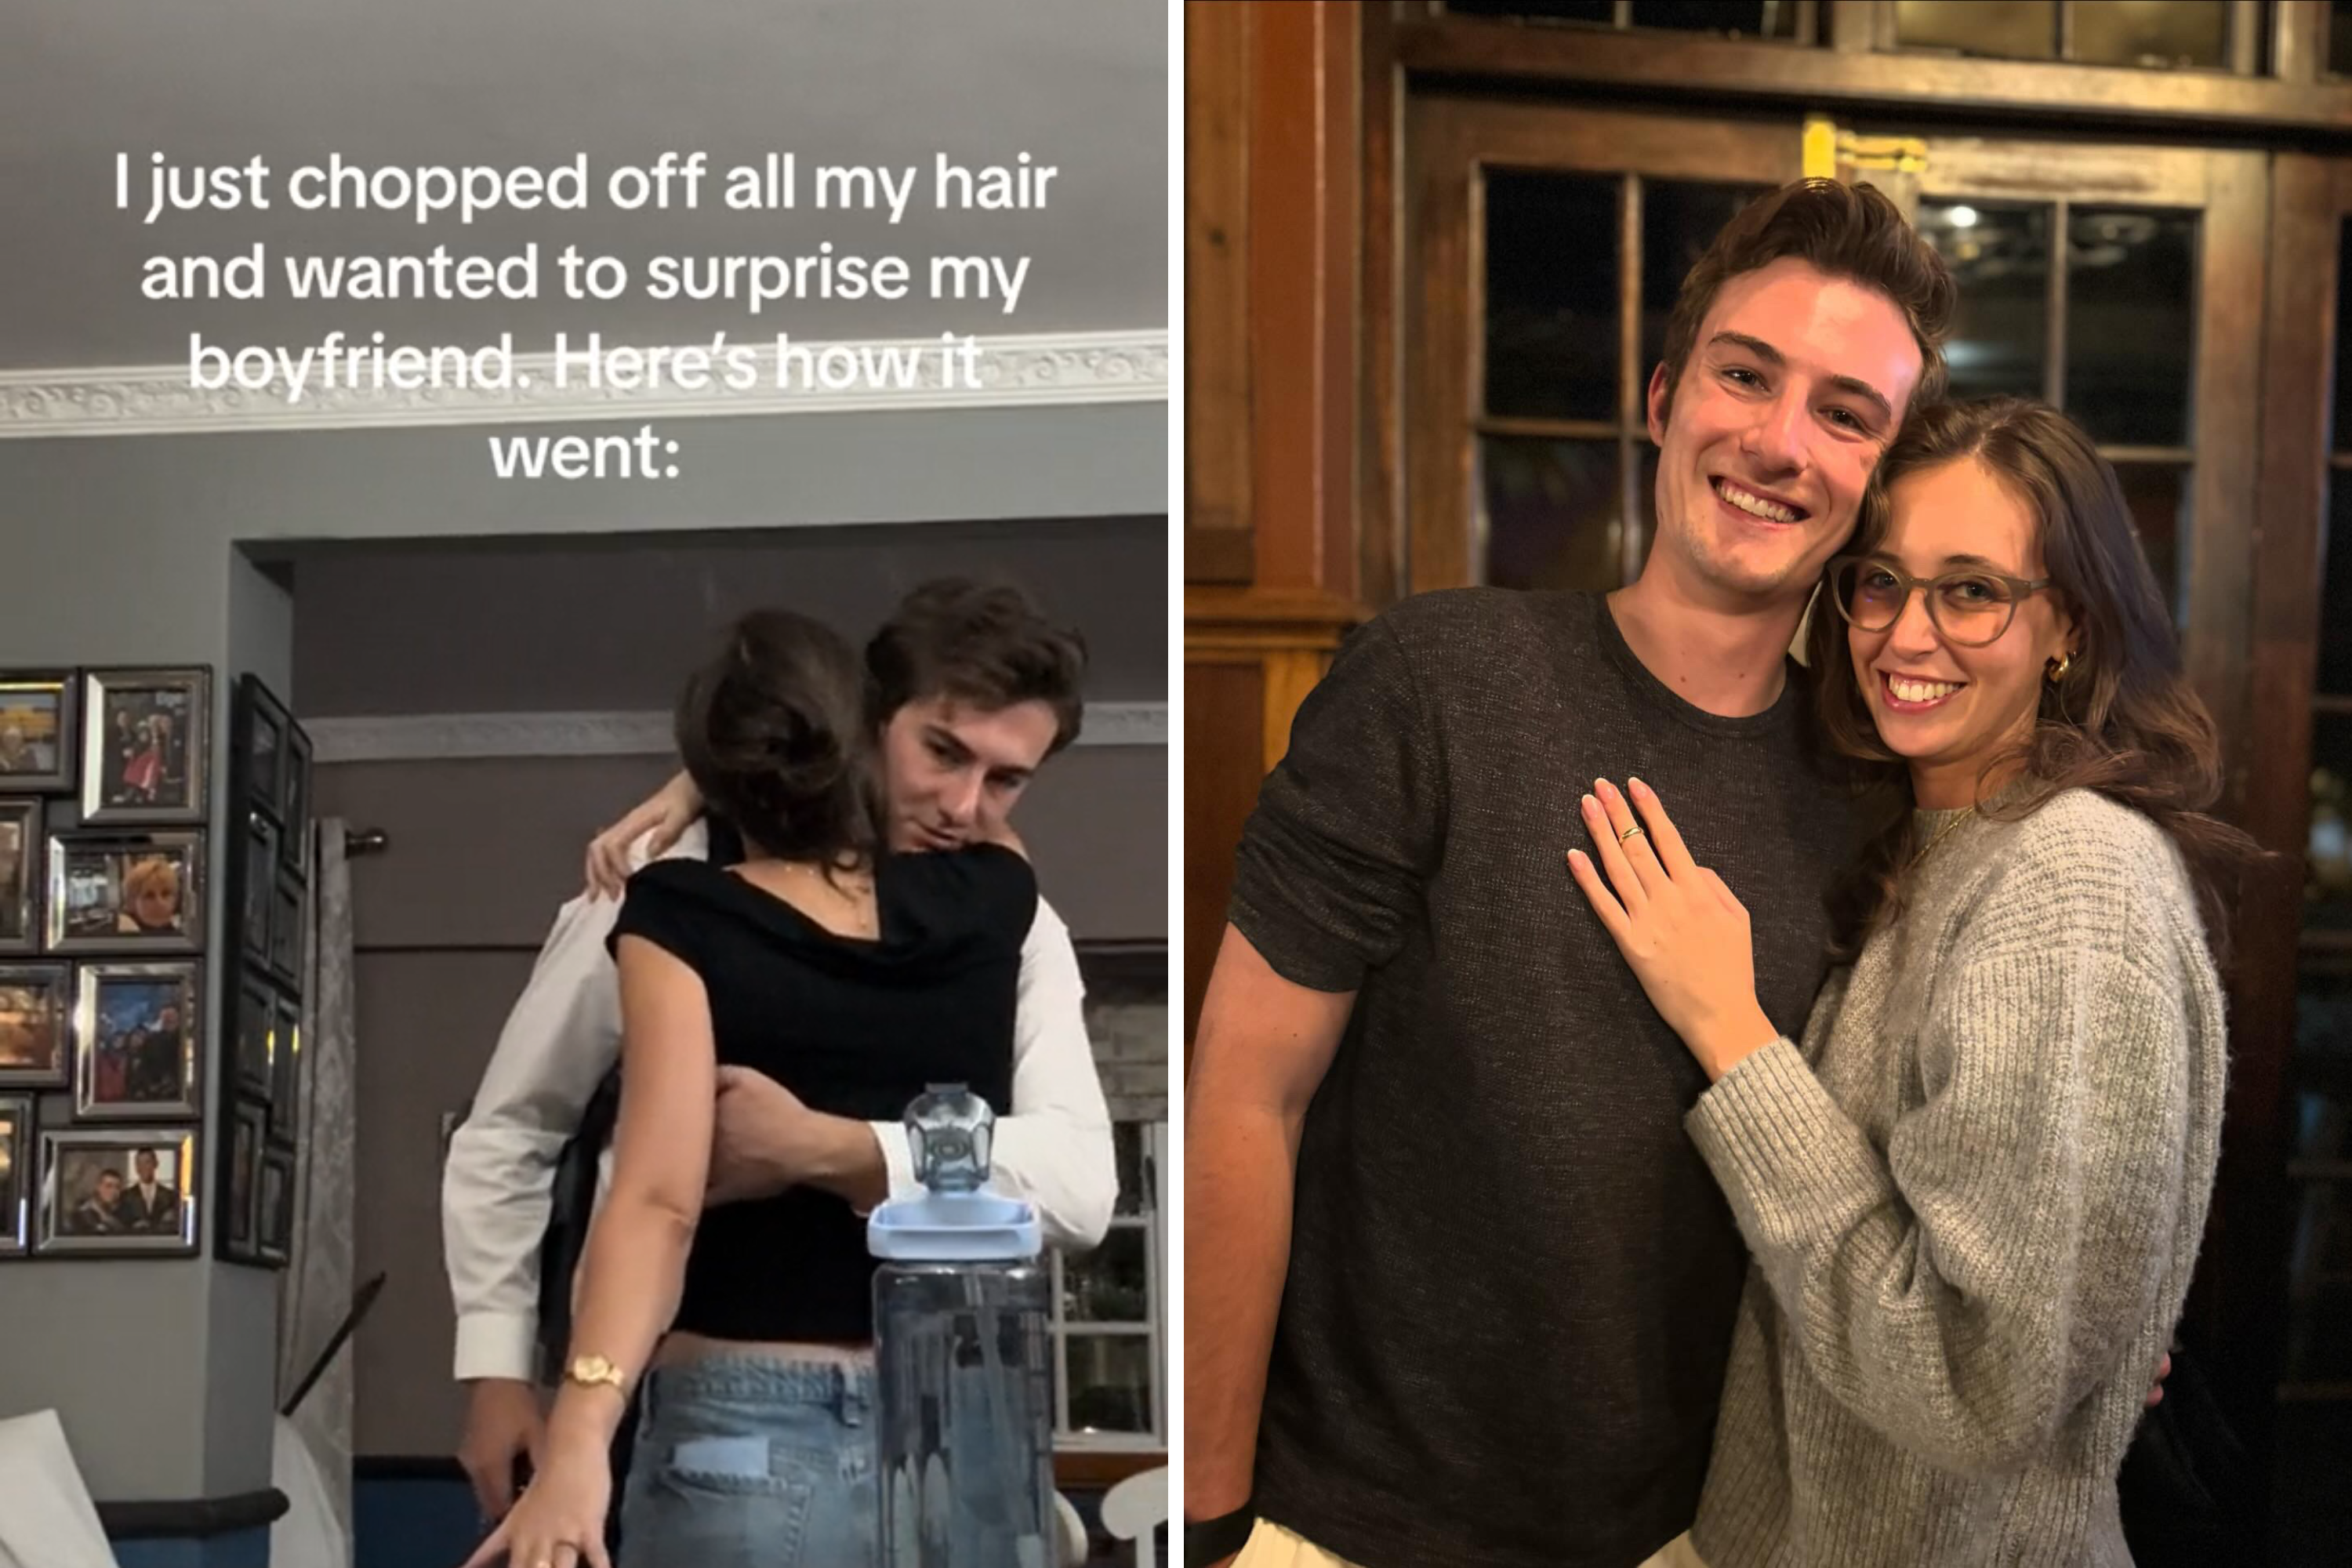 Woman surprises boyfriend with new short haircut, reaction deserves a medal